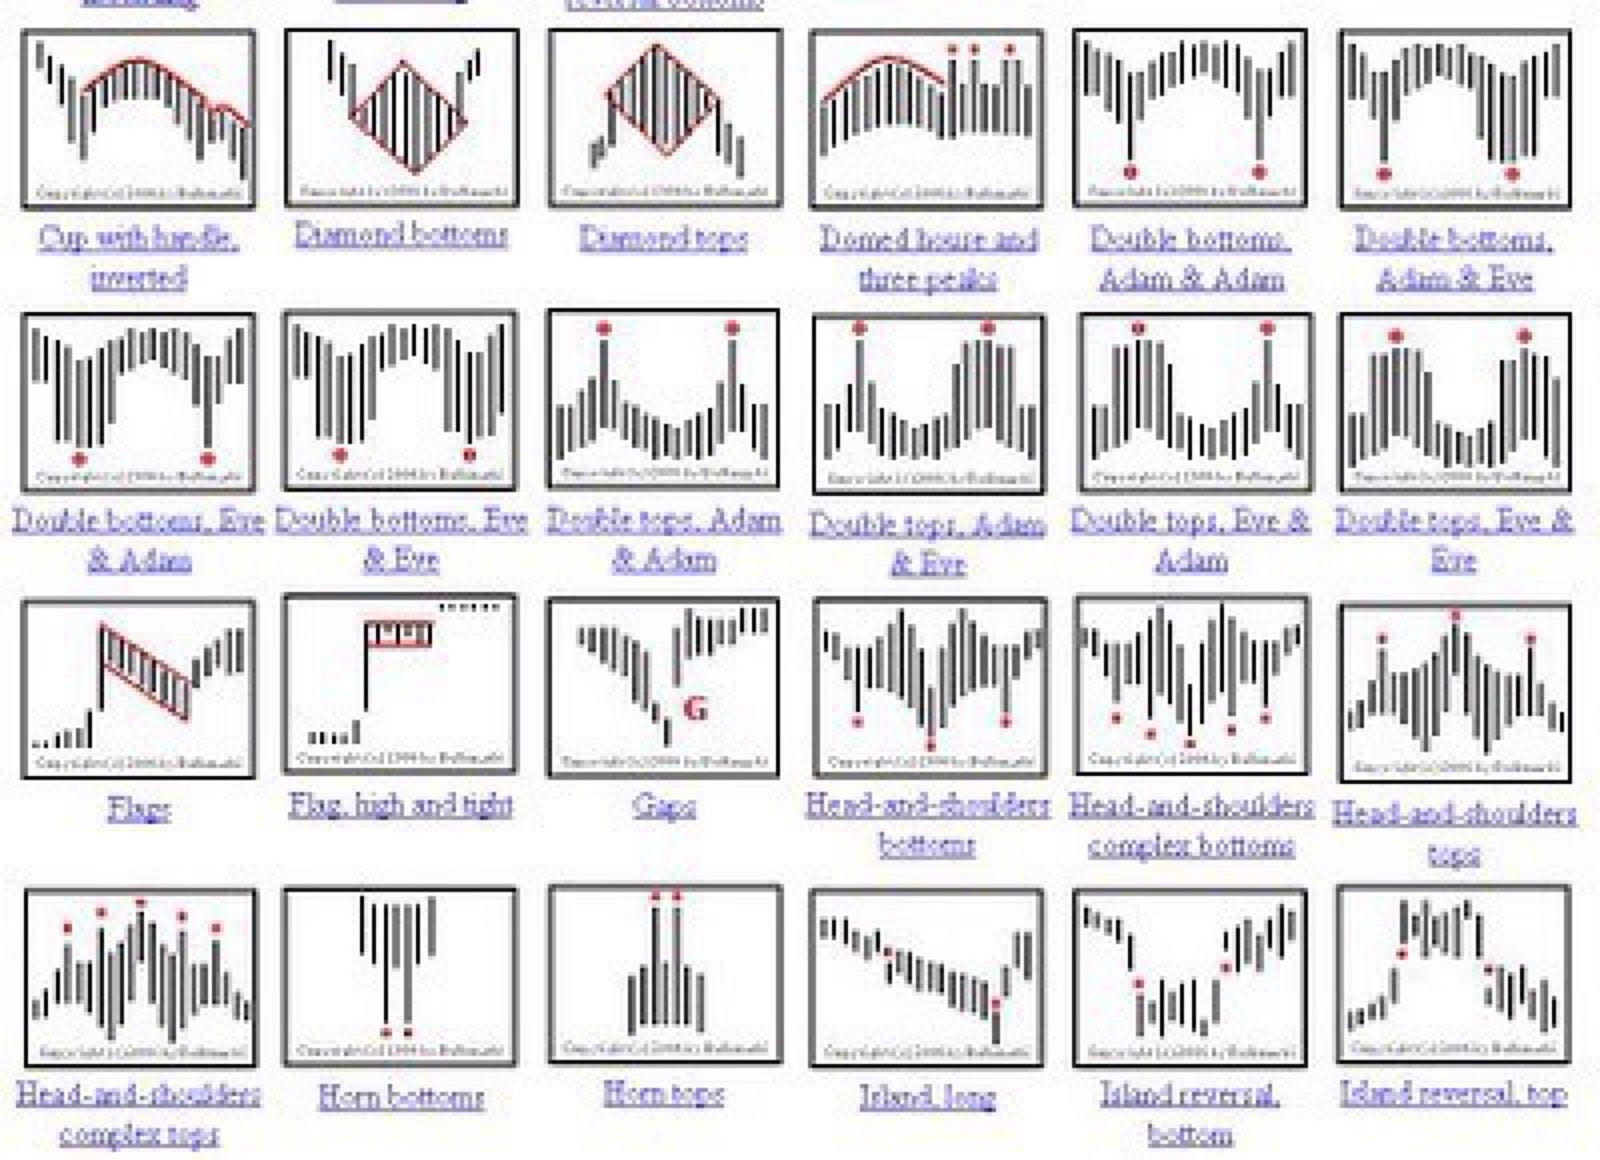 S Stock Chart